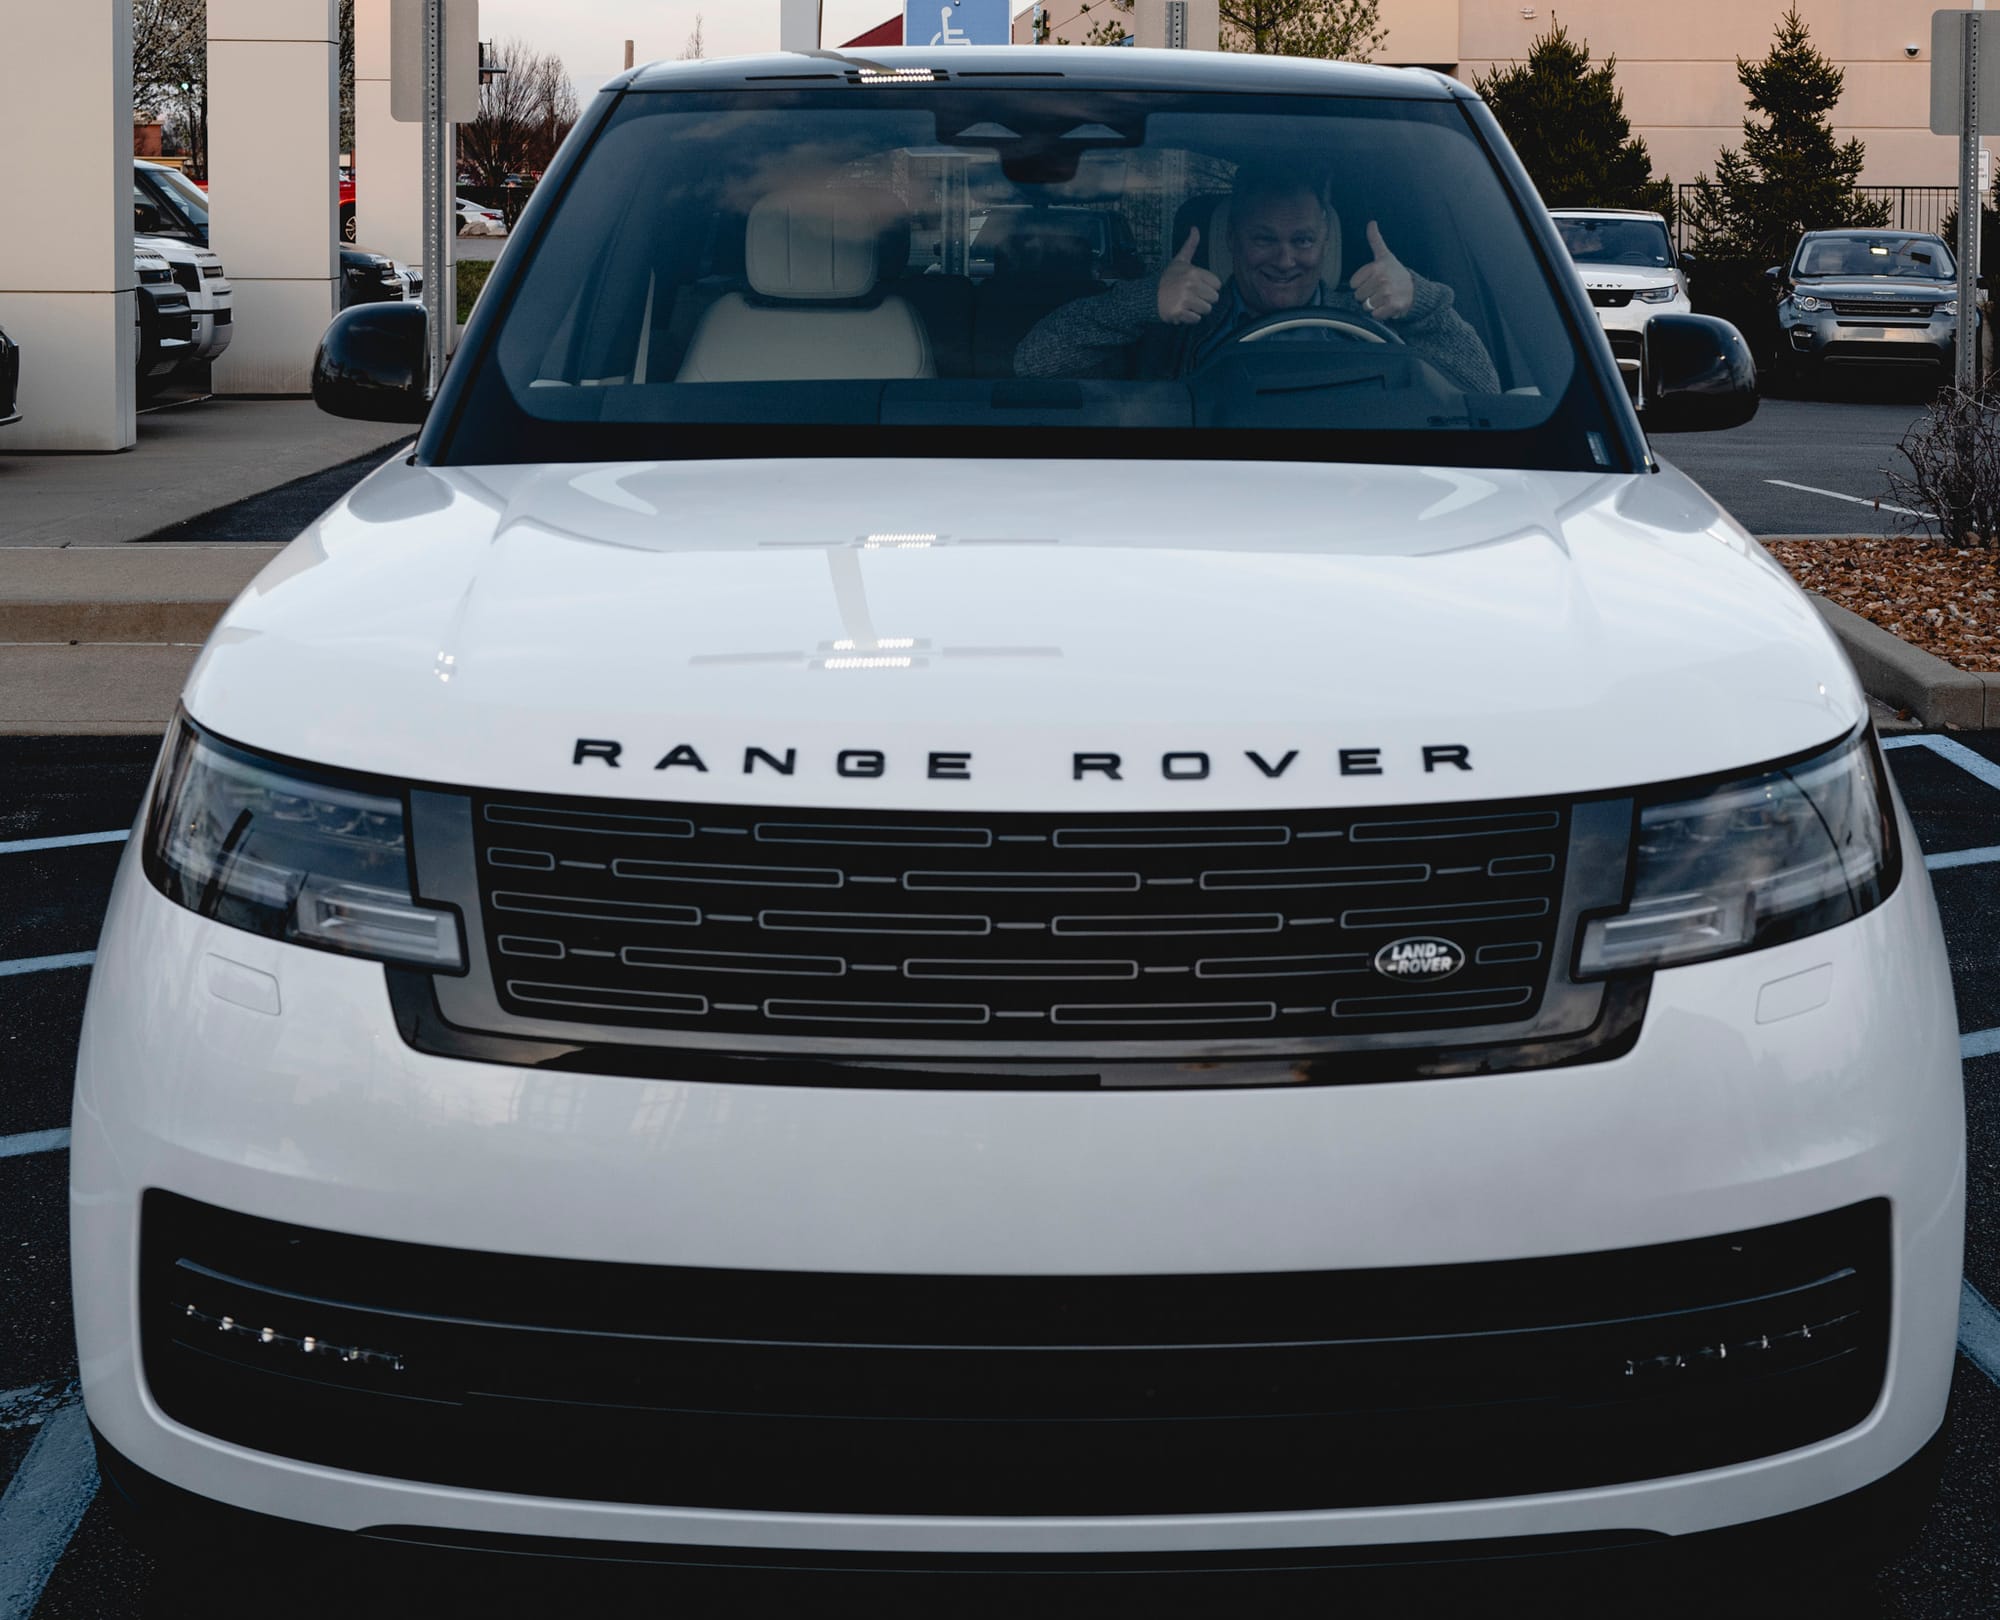 We Finally Get a Range Rover